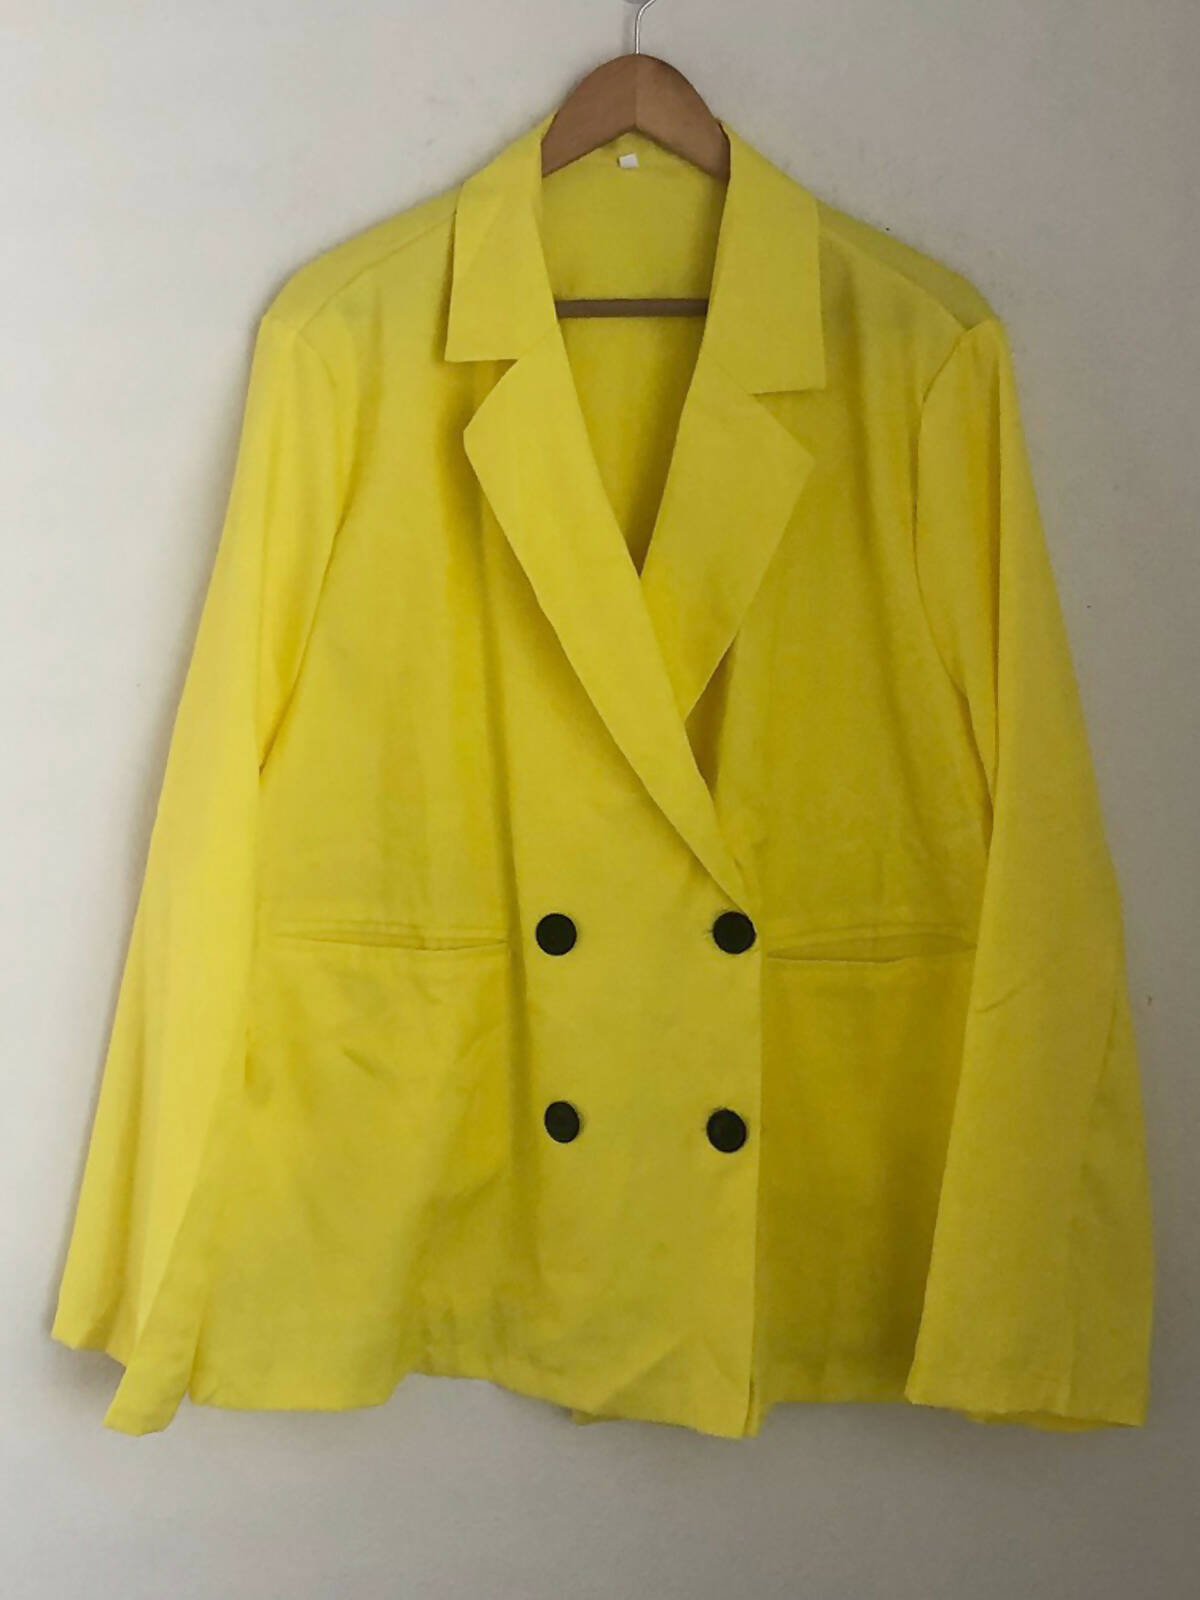 Yellow cute blazer jacket